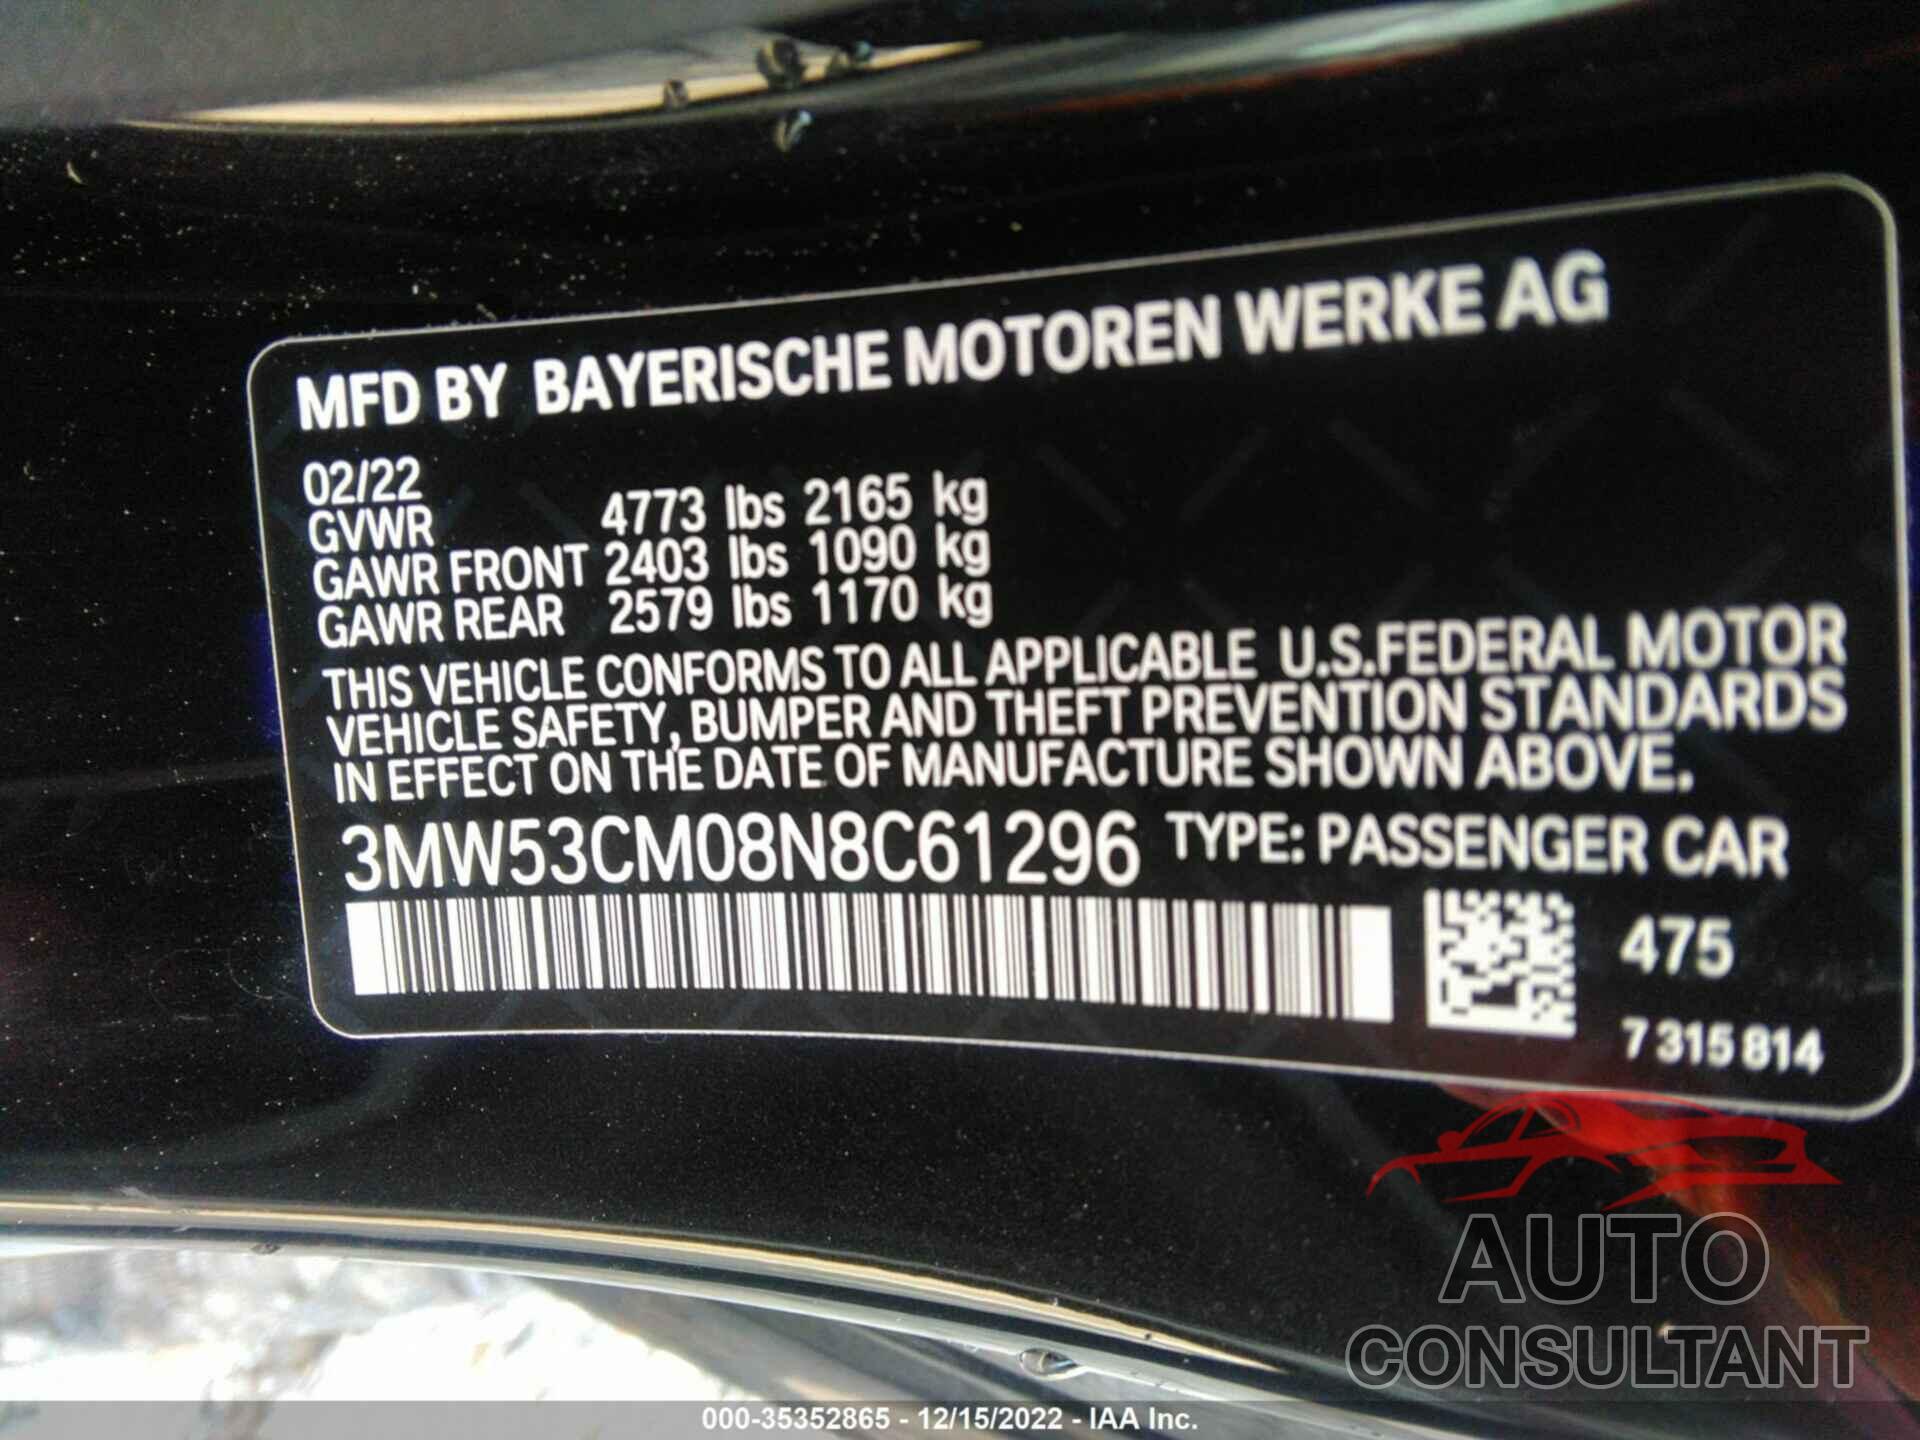 BMW 2 SERIES 2022 - 3MW53CM08N8C61296